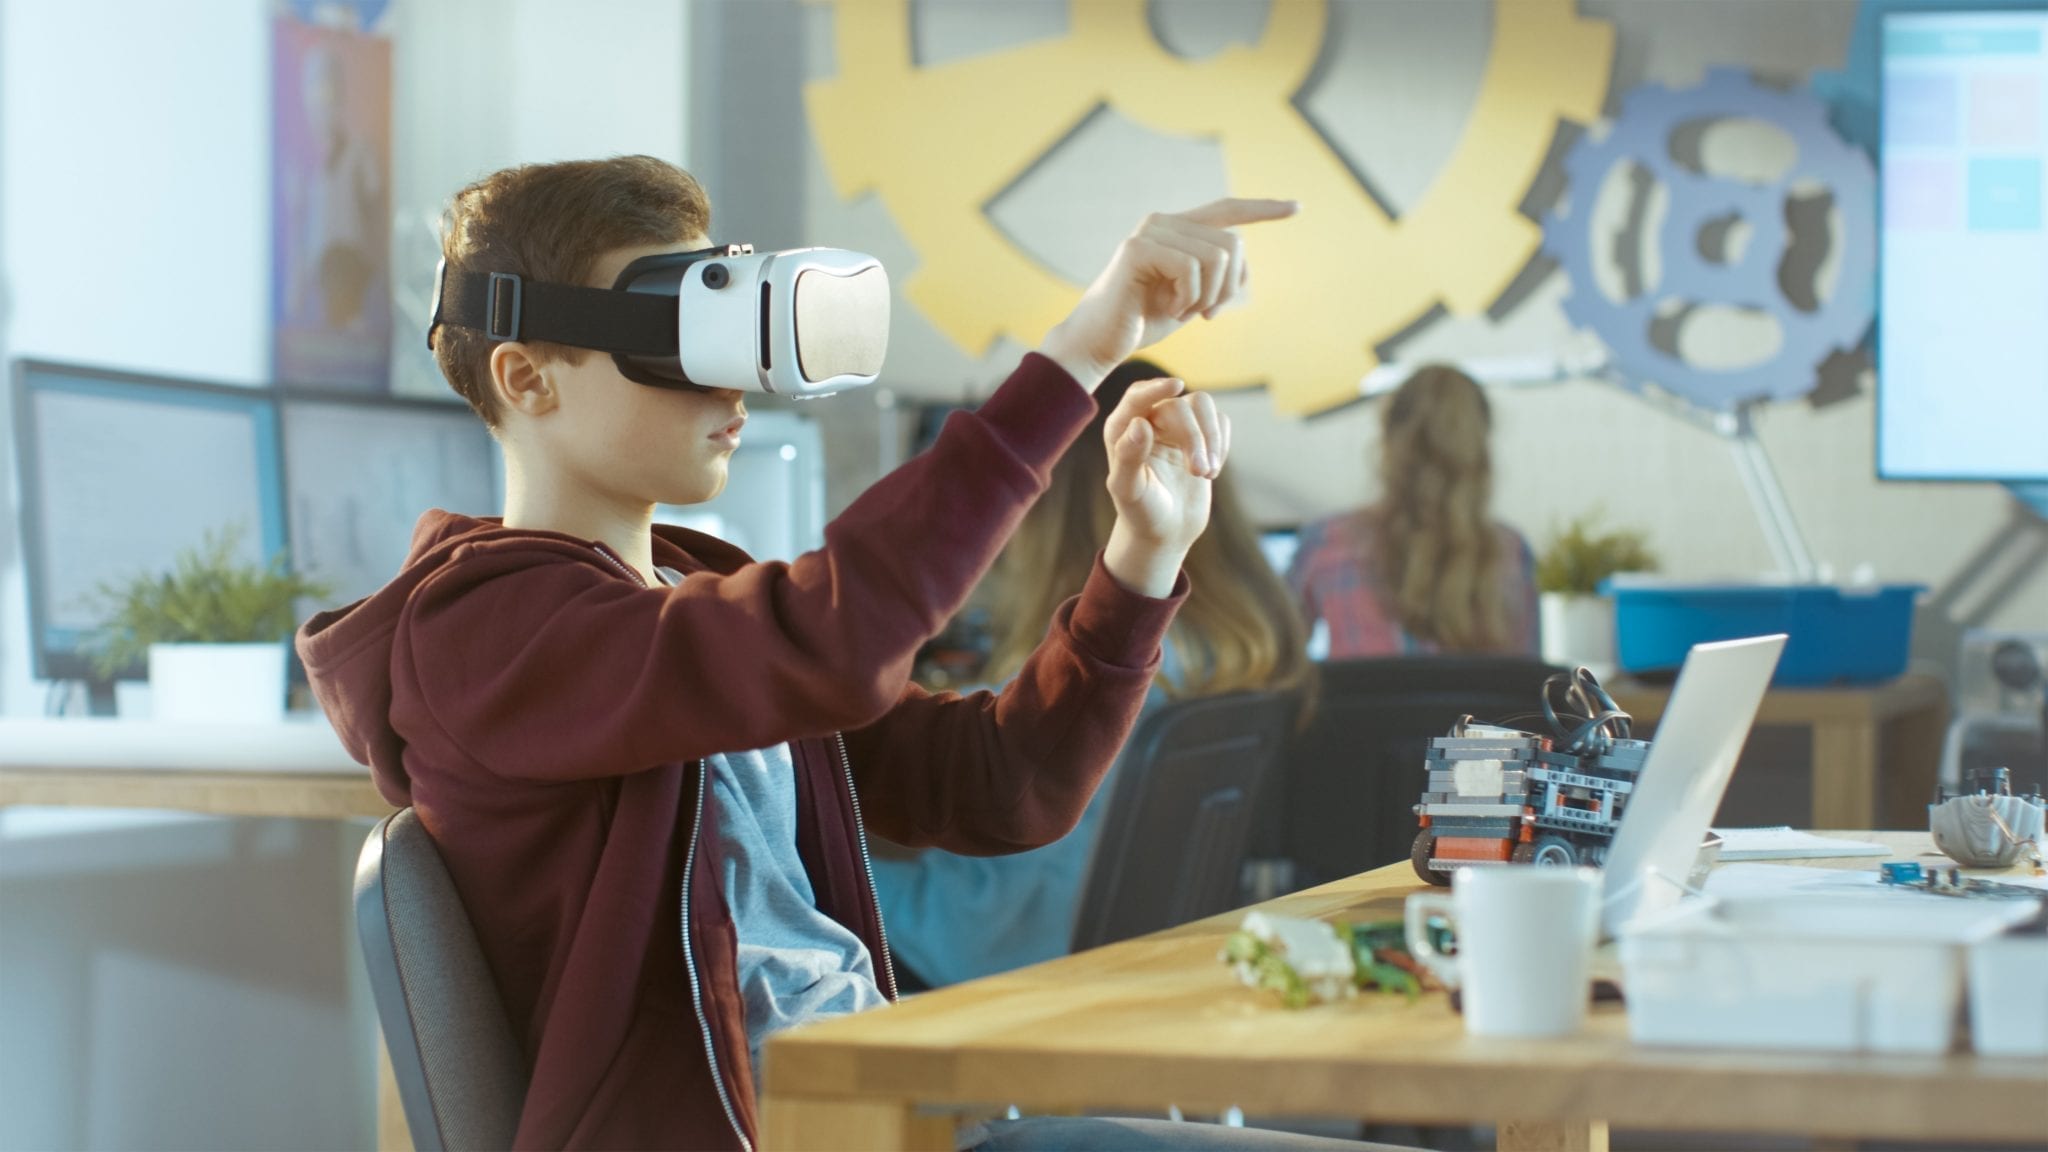 Student using virtual reality